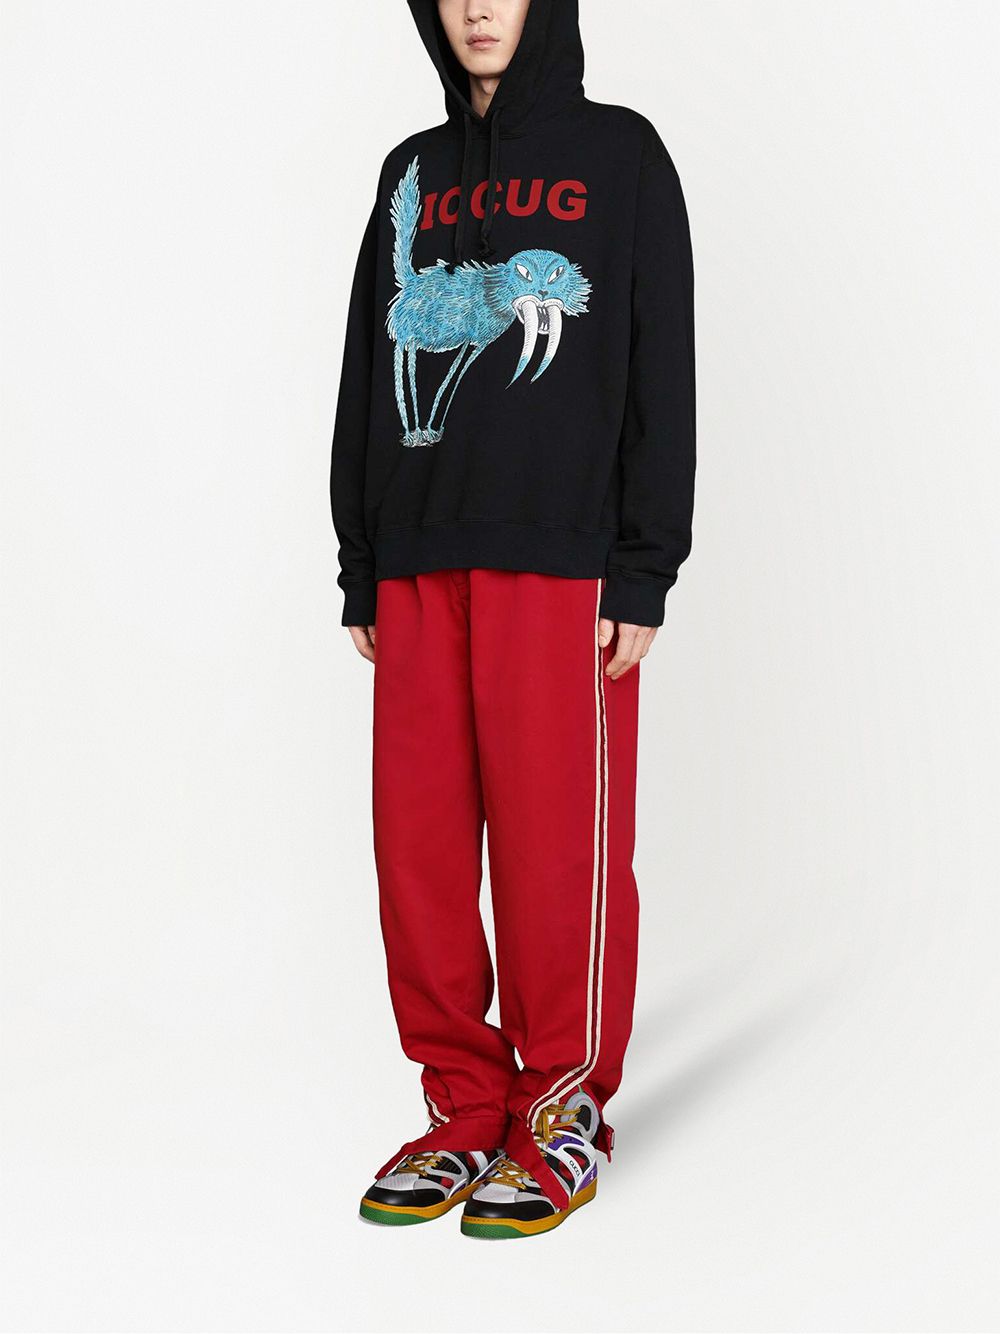 Gucci x Freya Hartas ICCUG hoodie - Zwart